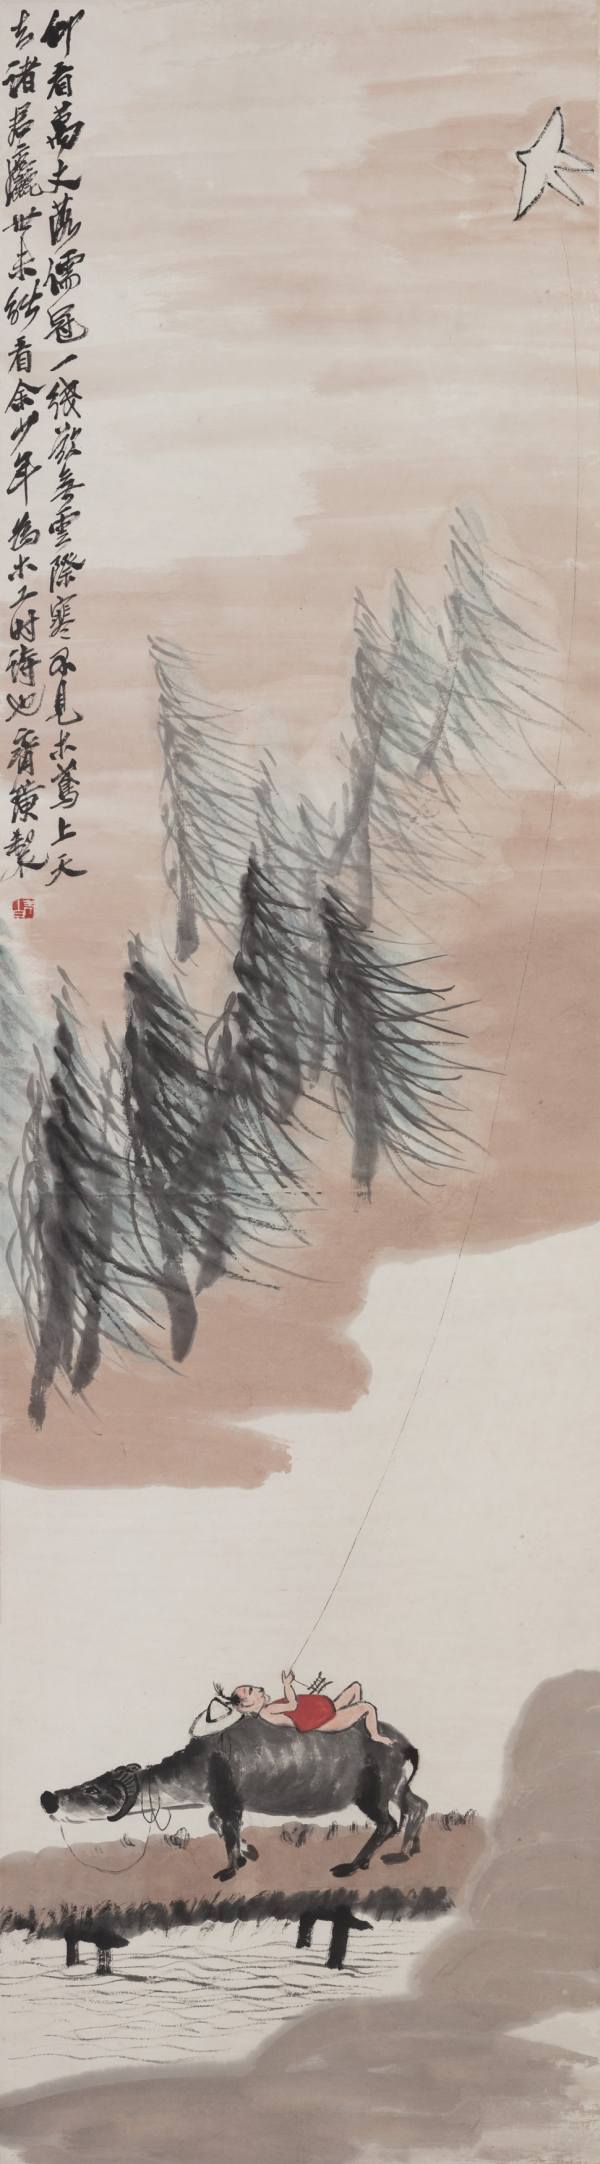 Qi Baishi, Flying a Kite, China, c. 1930
